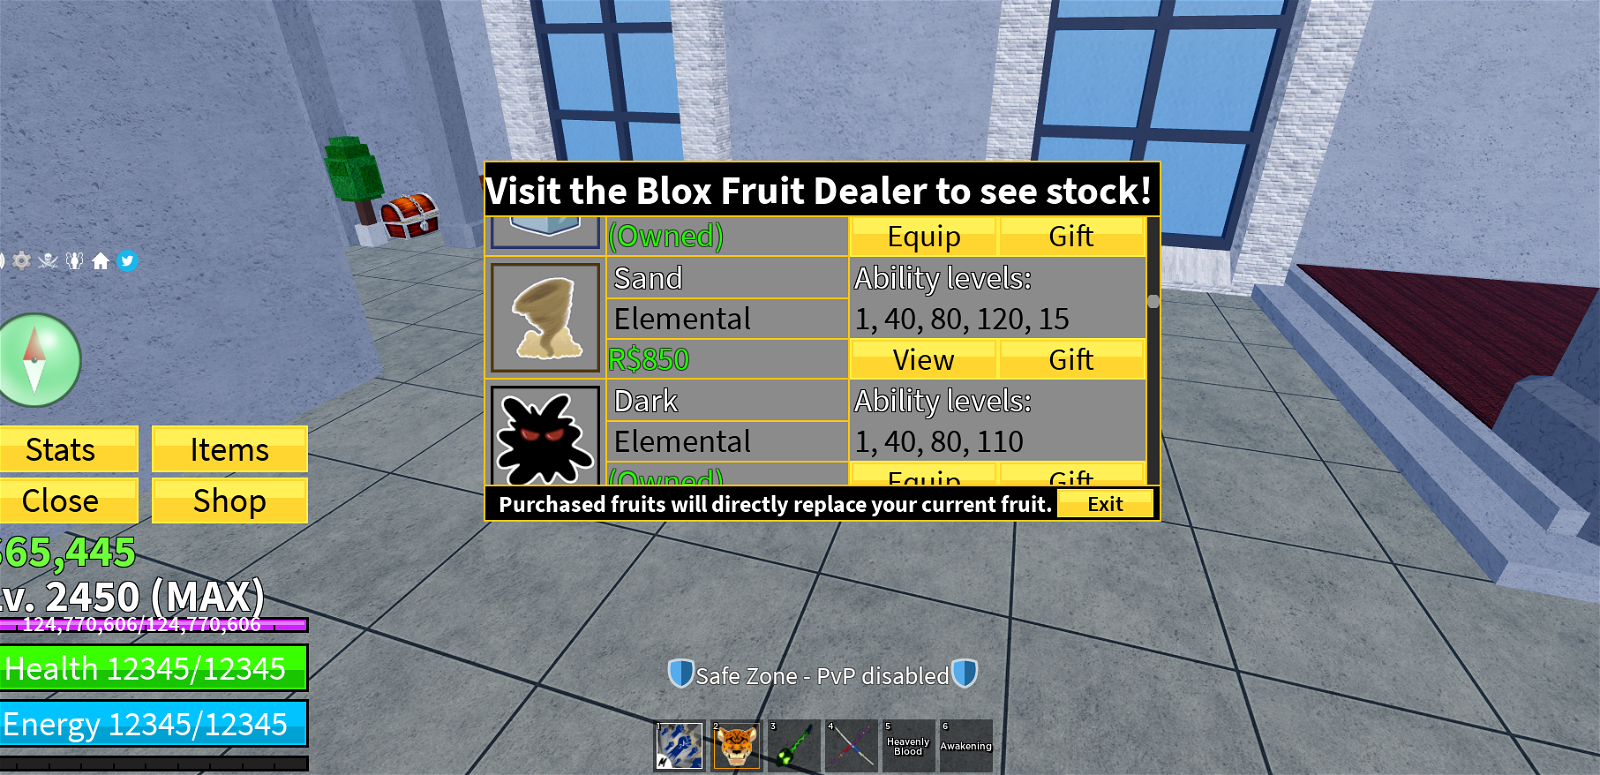 Selling - Blox Fruits Account, Level 2450